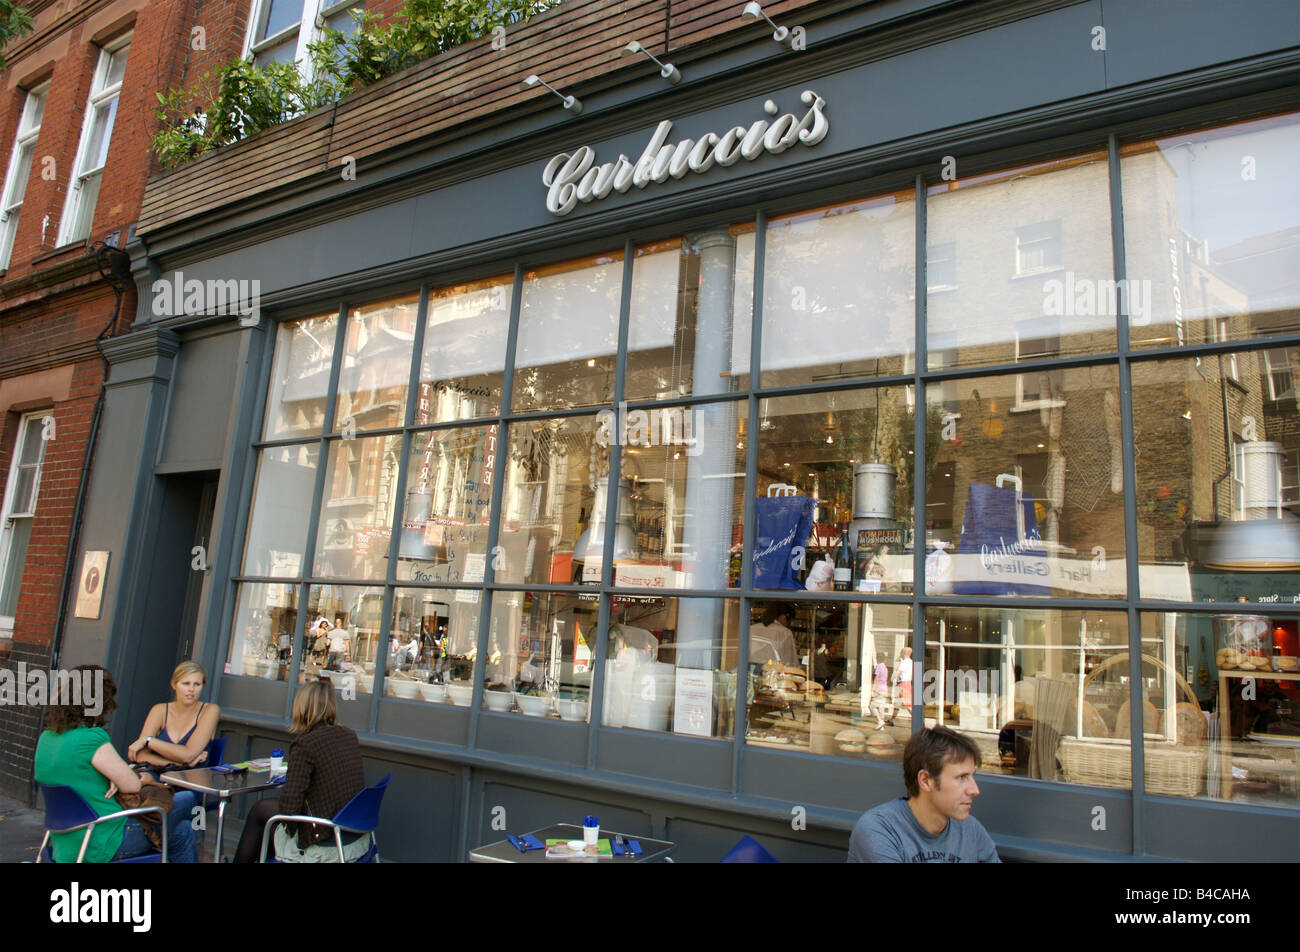 Carluccio's Restaurant and shop on Upper Street Islington, London Stock Photo